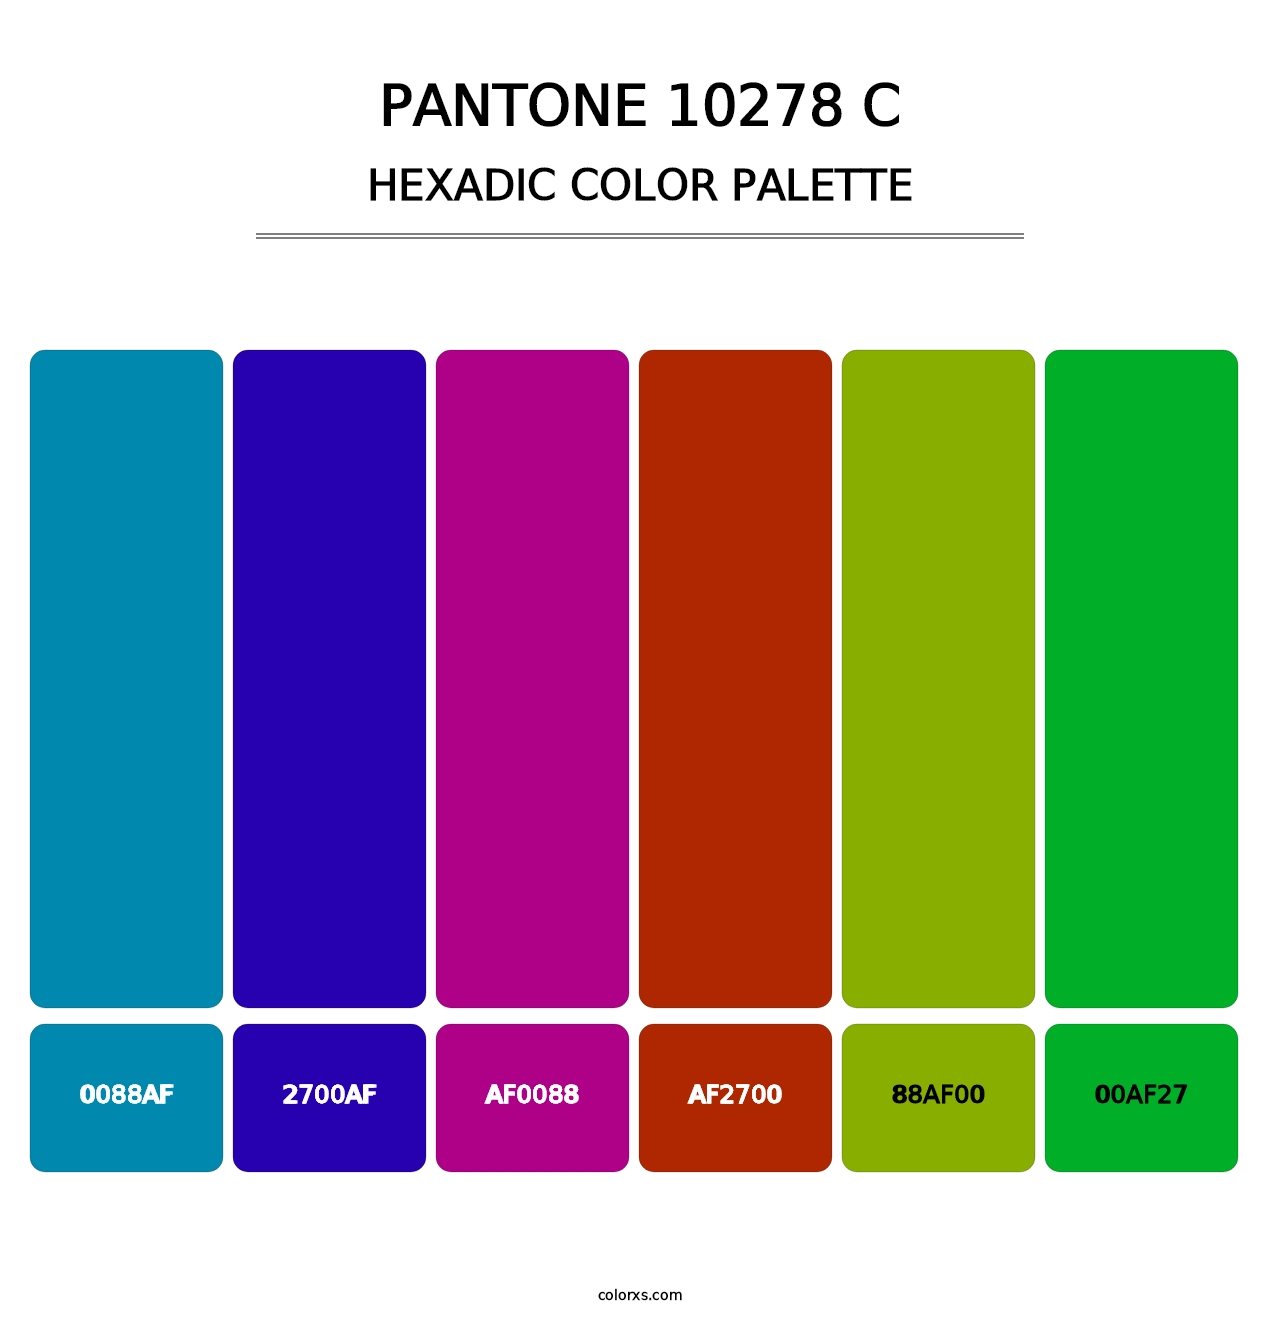 PANTONE 10278 C - Hexadic Color Palette